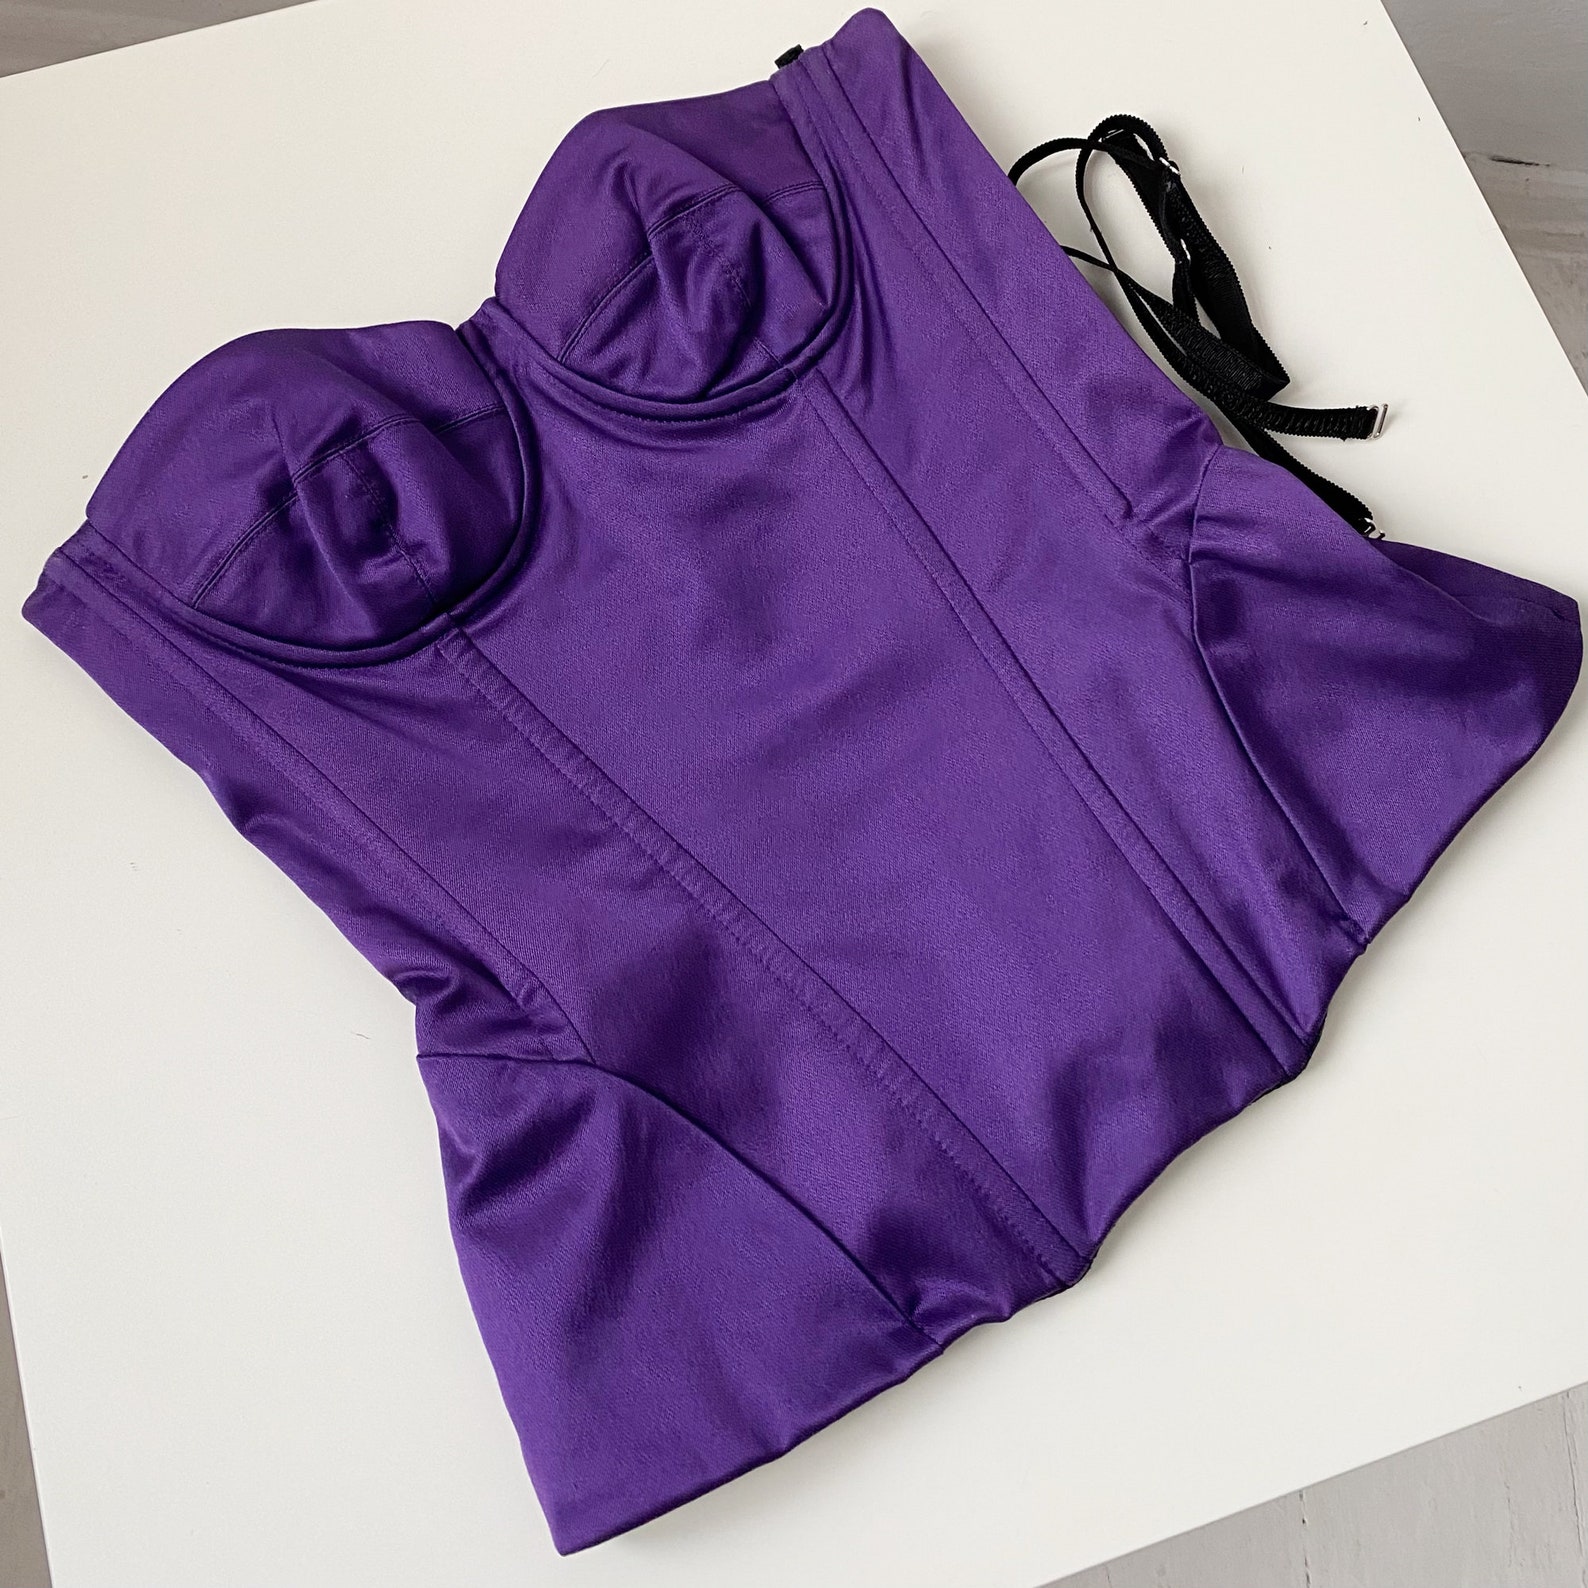 D&G Corset Top Purple Silk Satin Boned Bustier Top | Etsy